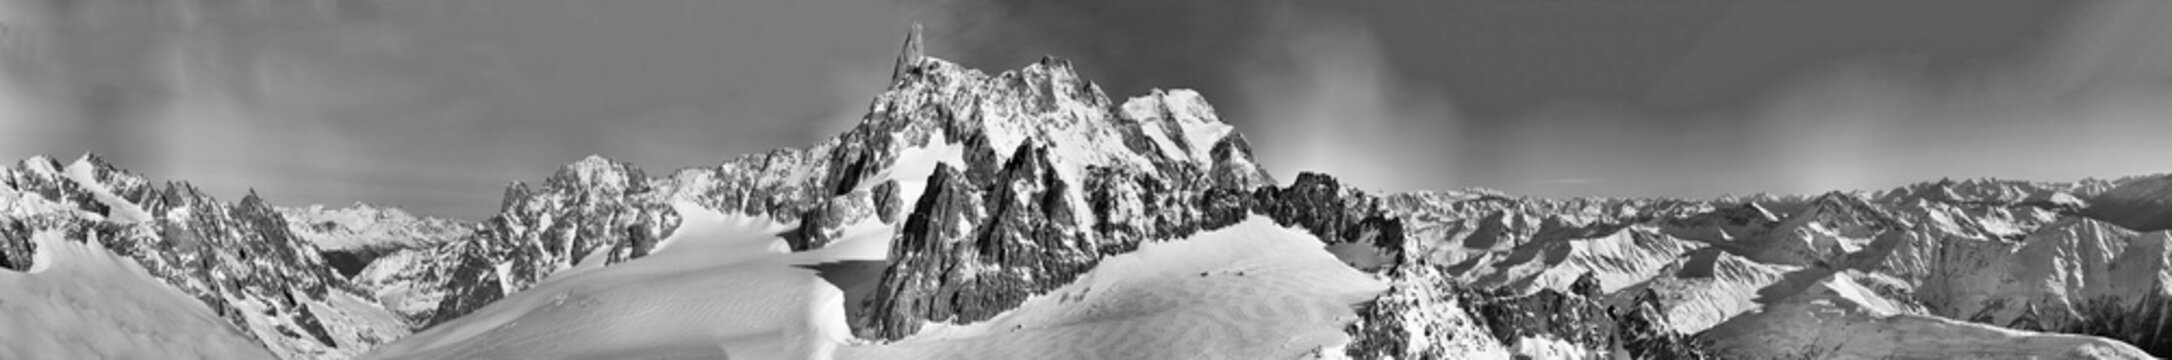 Fototapeta Monte Bianco Panorama in bianco e nero